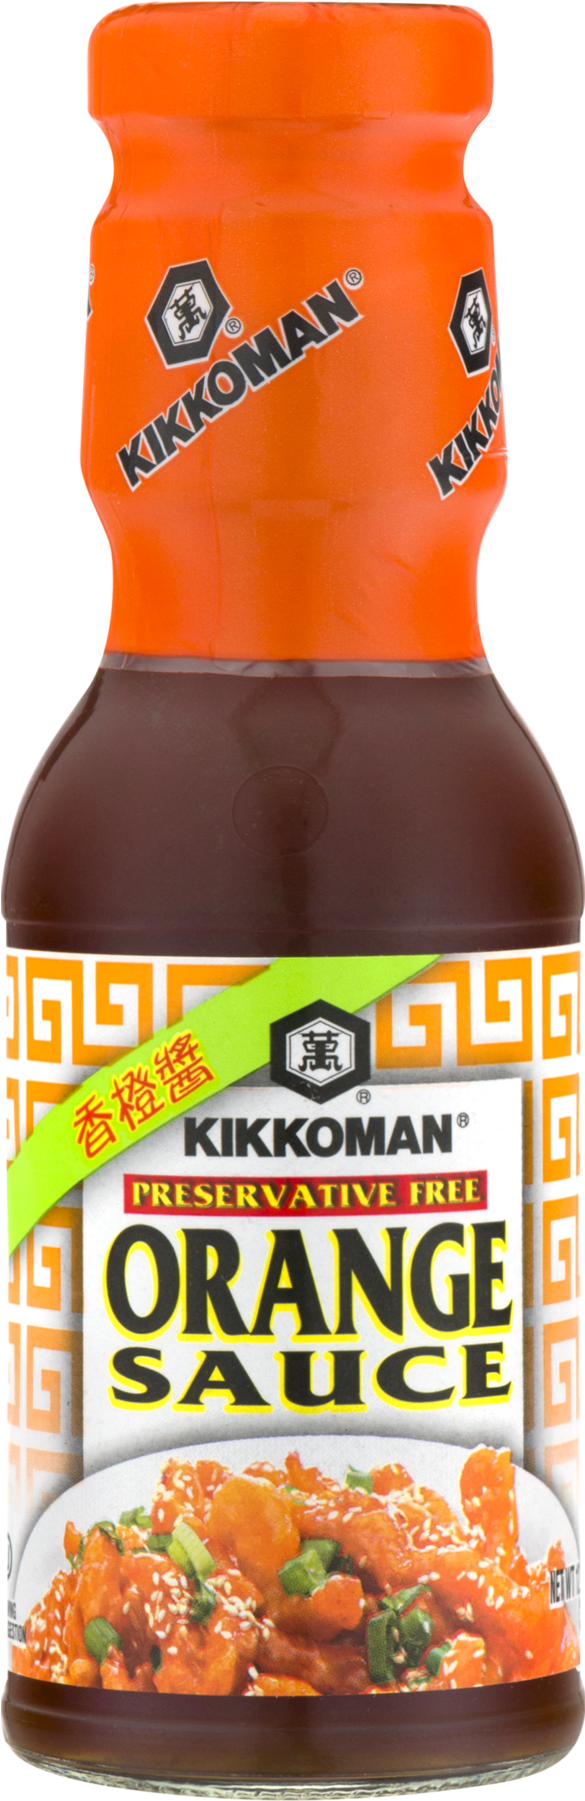 Sauce Kikkoman Orange Sauce 12.5 Oz Preserved Free Clipart (1800x1800), Png Download